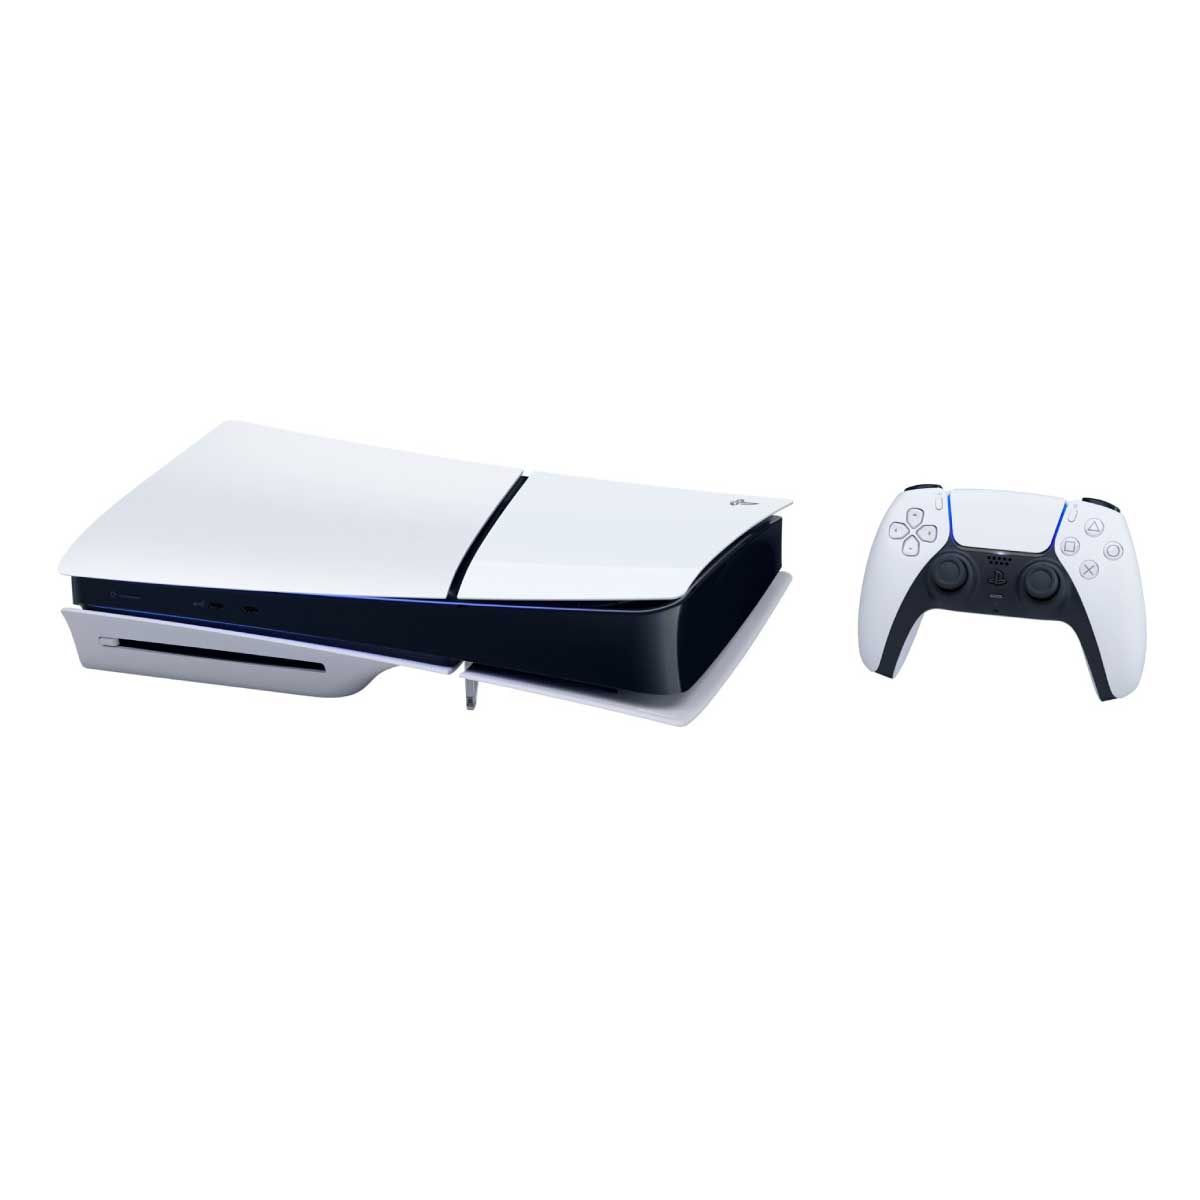 SONY PlayStation 5 Slim Console Genshin Bundle 1TB รุ่น ASIA-00482 เครื่องเล่นเกมส์ PS5